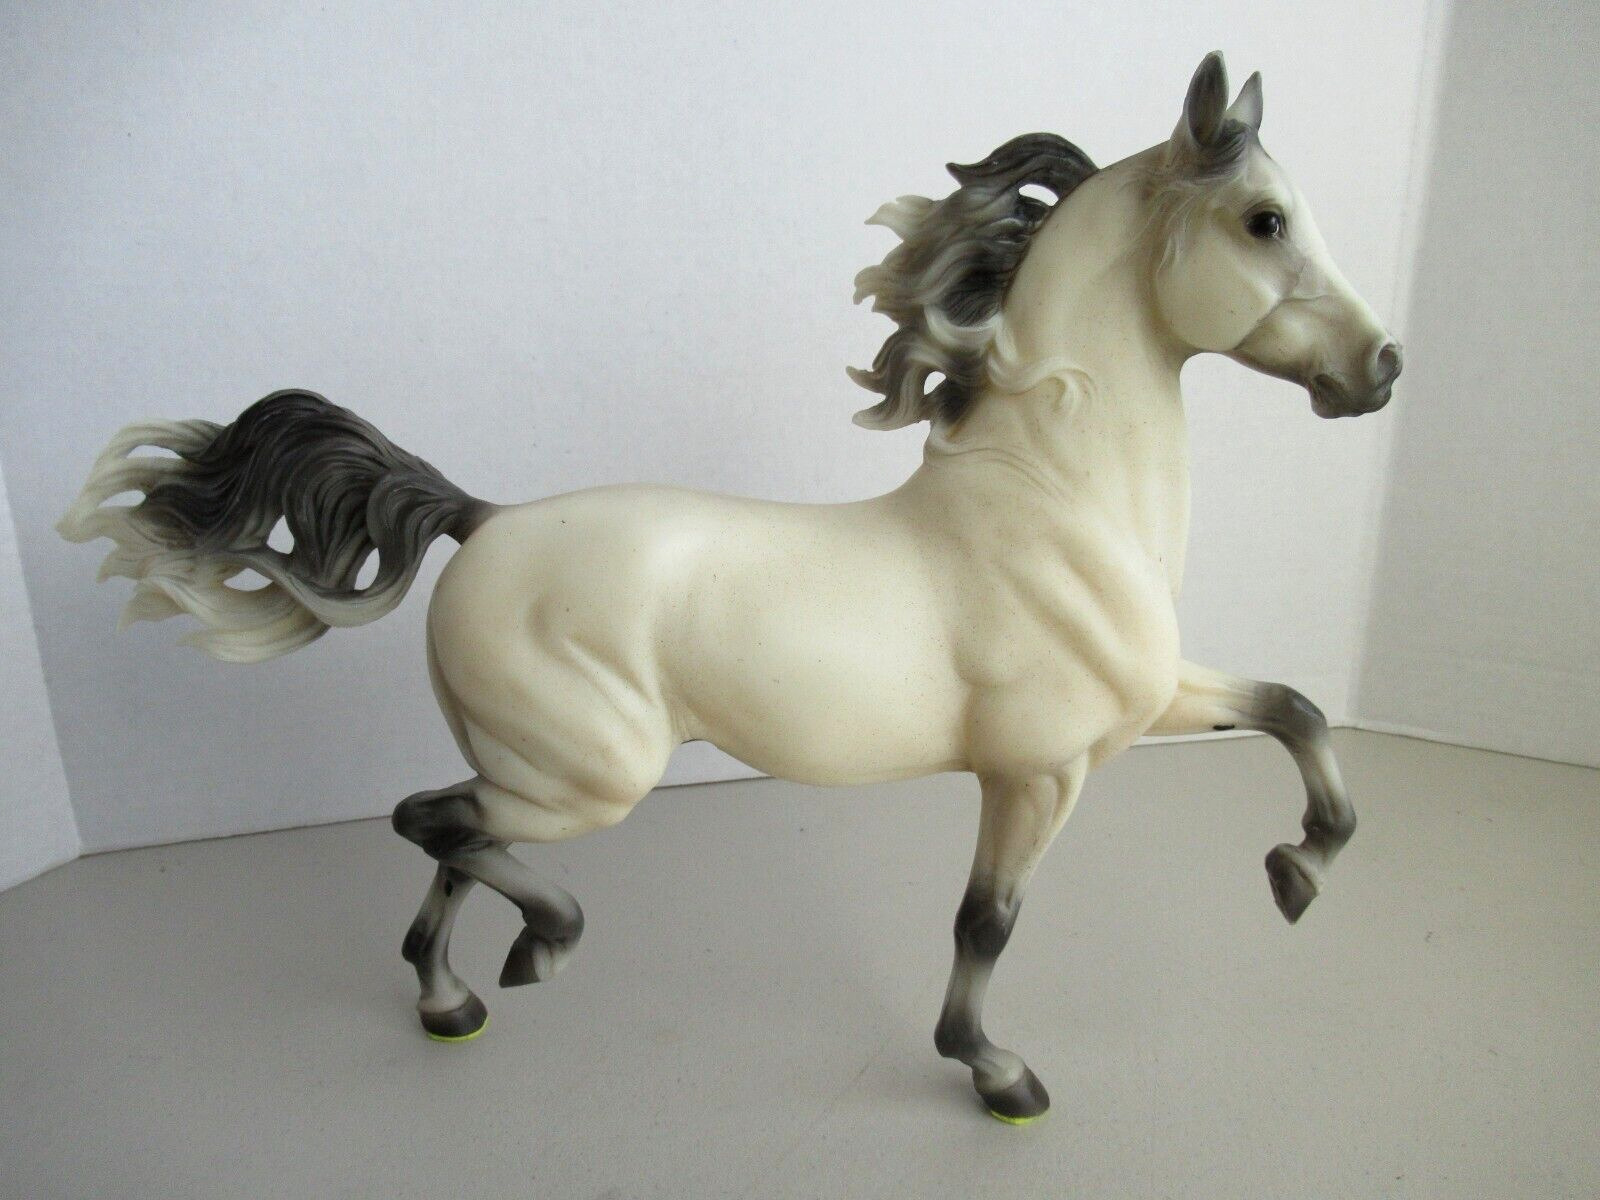 Breyer Traditional Horse #1186 “Napoleon’s Marengo Horses In History” RARE HTF